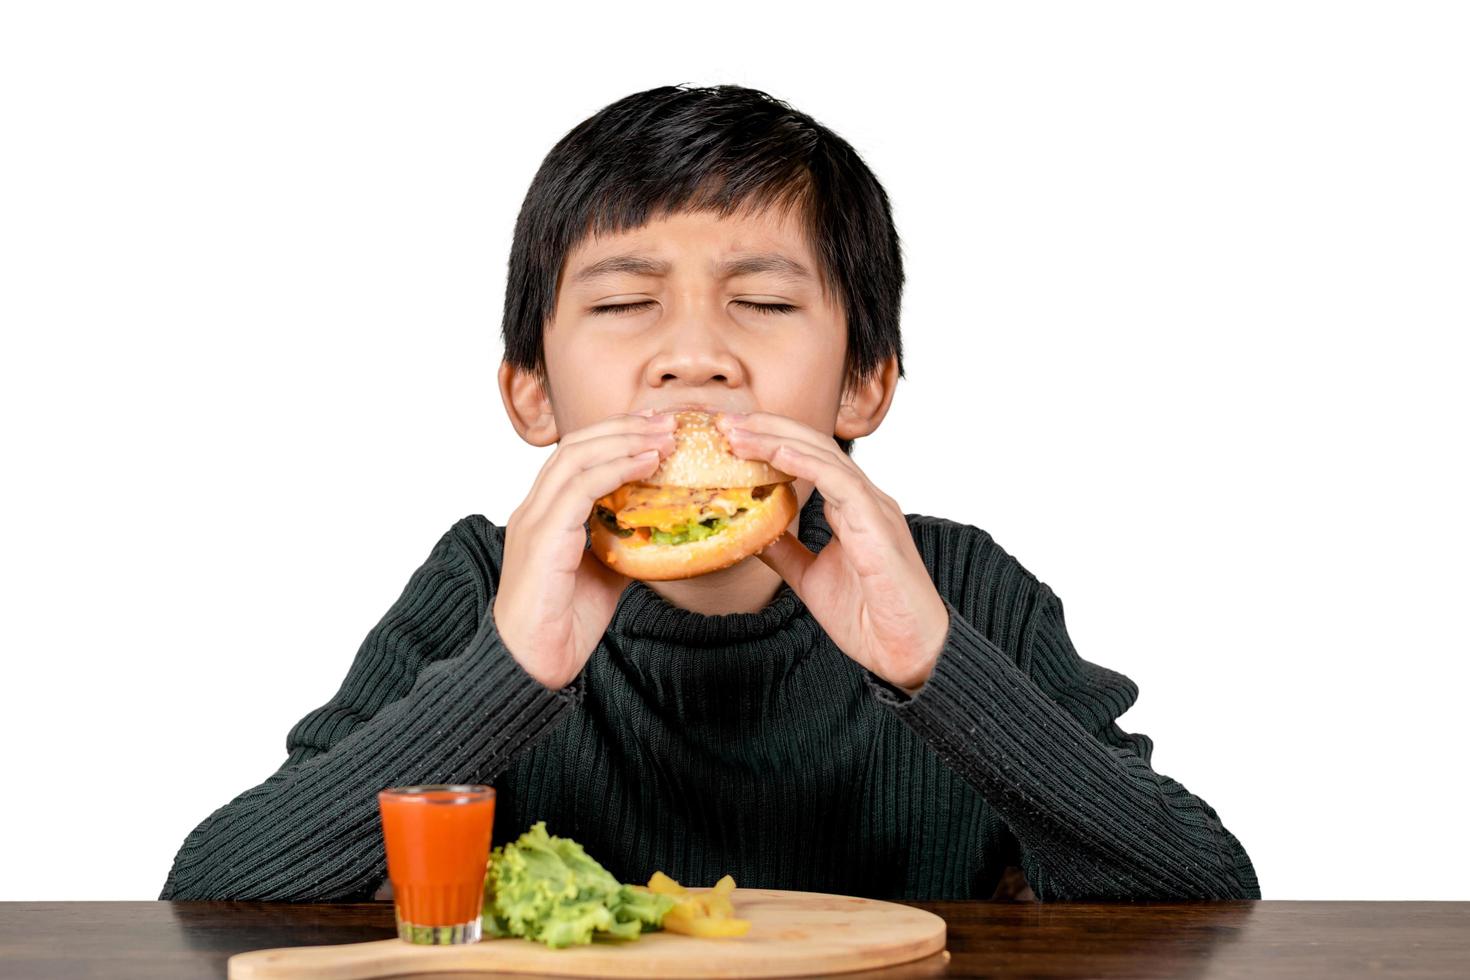 Cute Asian boy in black shirt eating a delicious hamburger photo